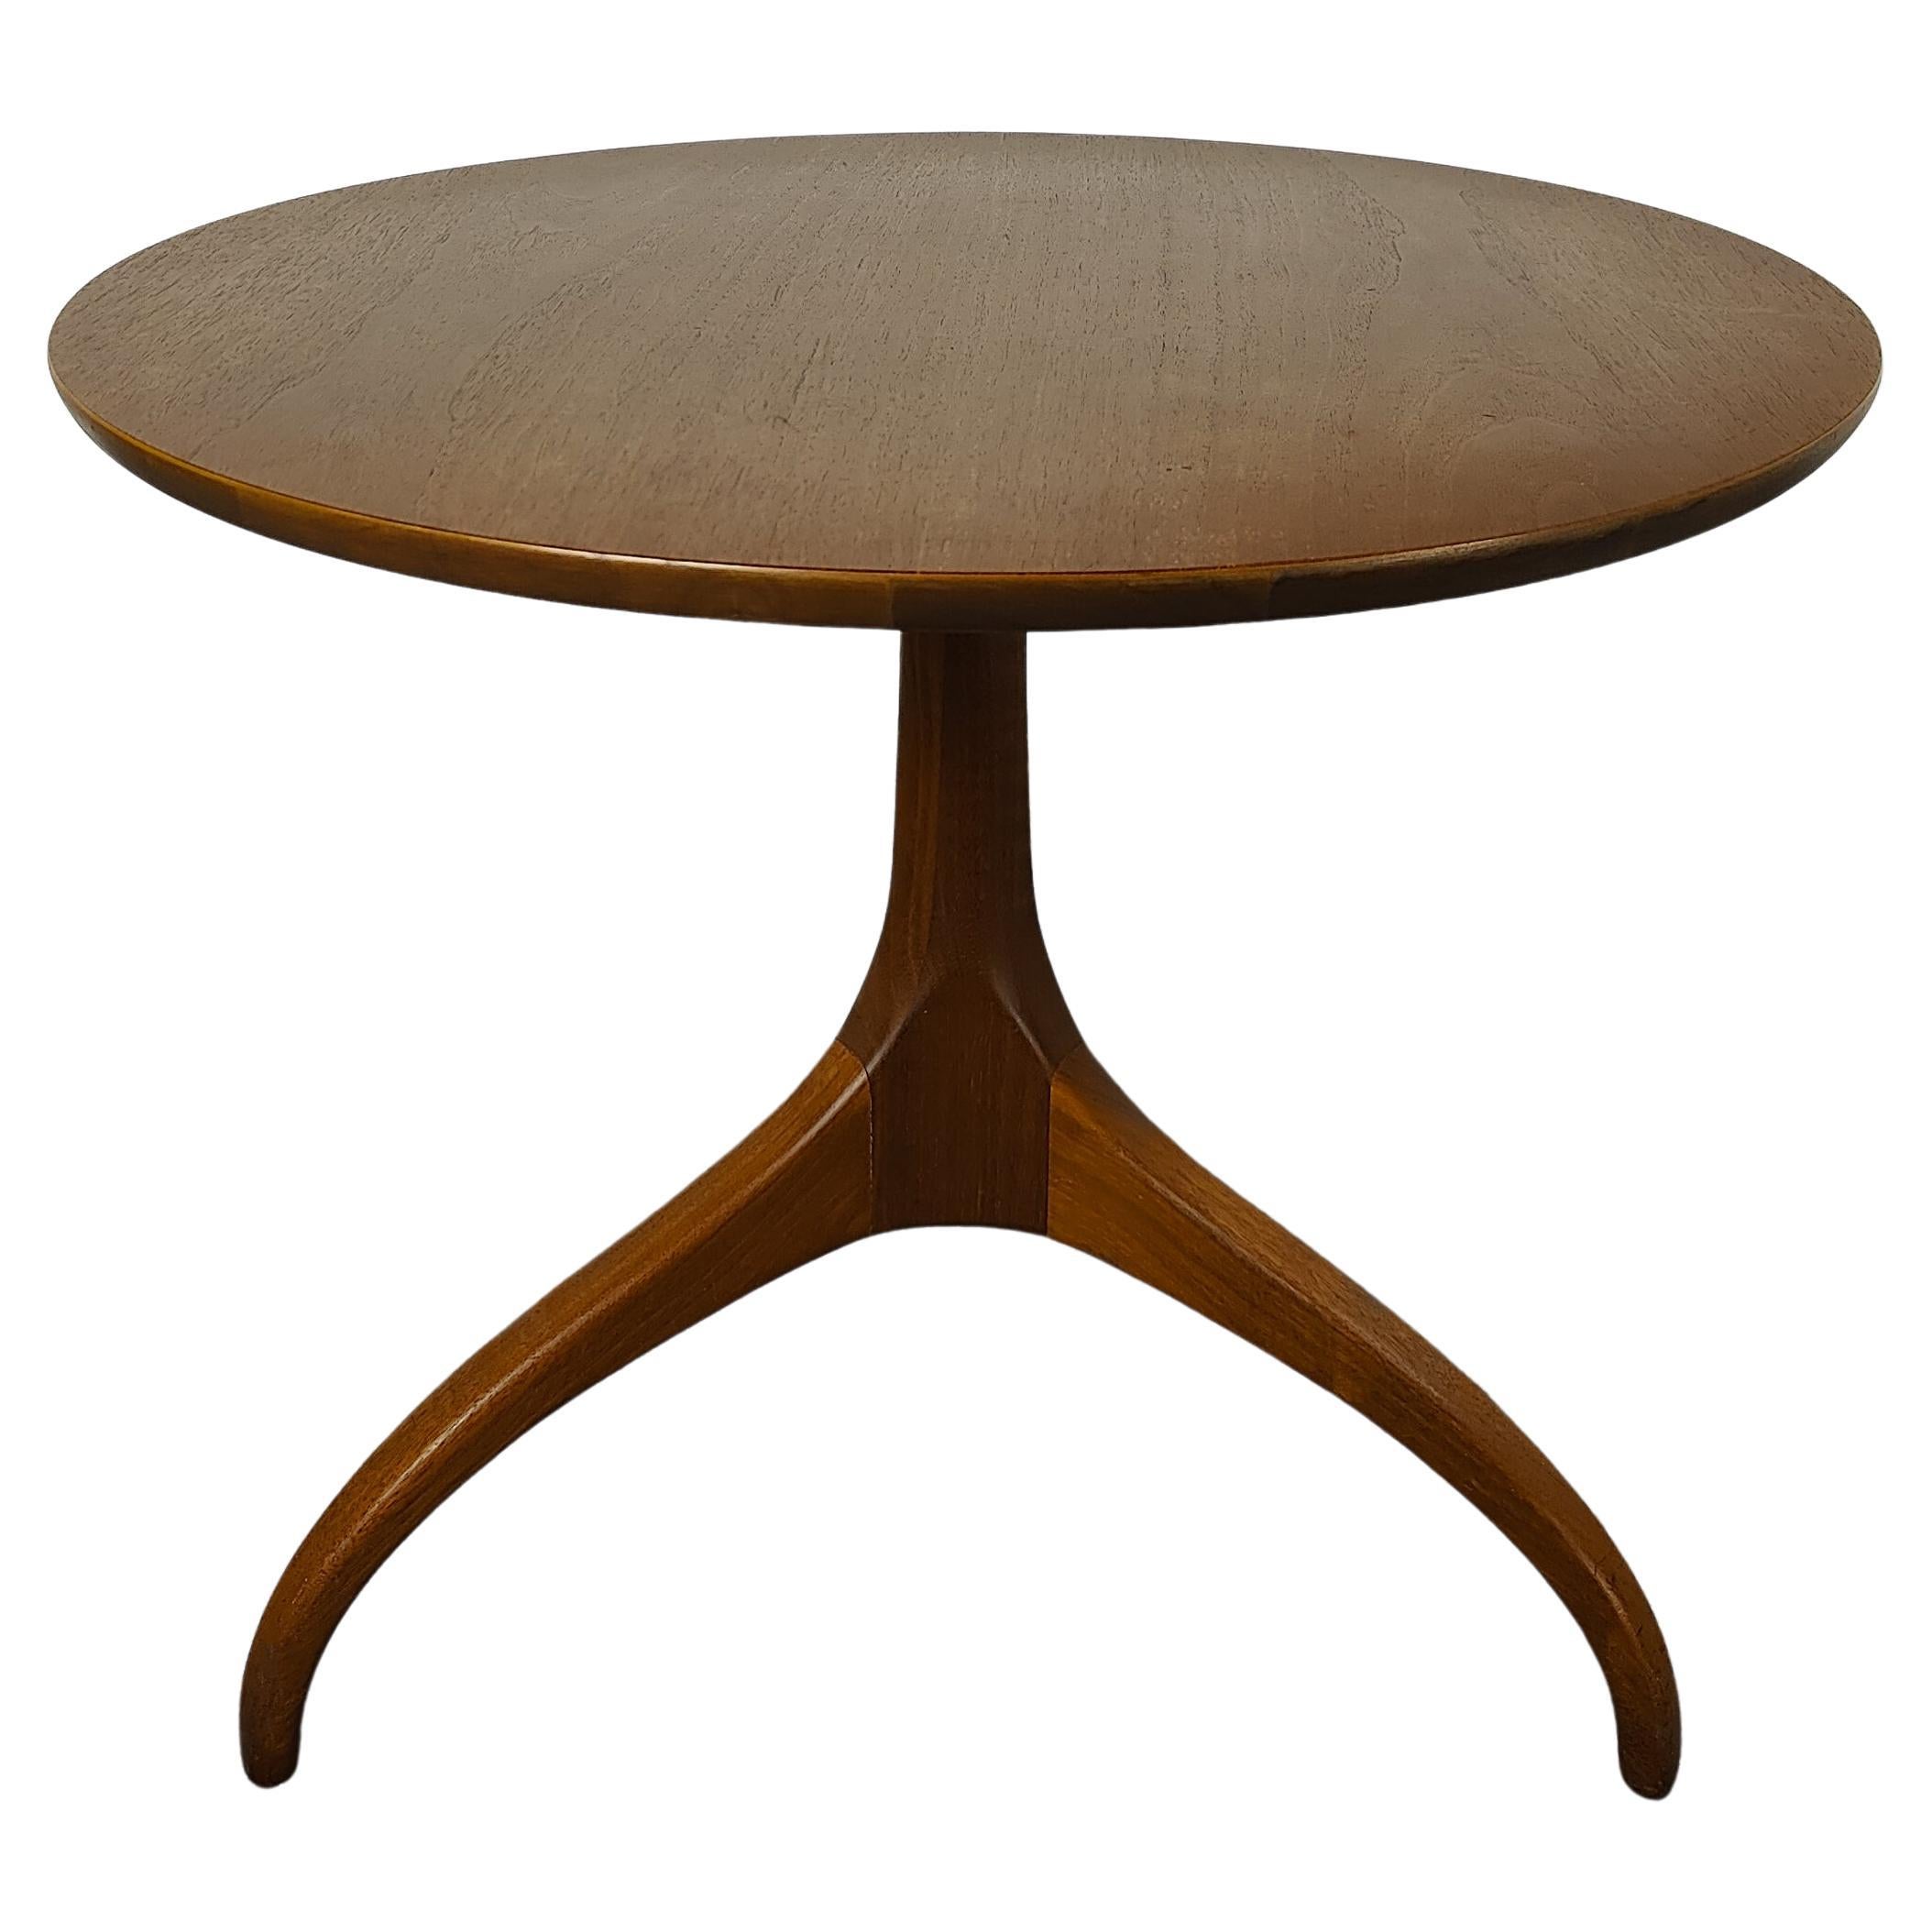 Vintage Mid-Century Modern Walknut Round Side Table on Tripod Base by Henredon